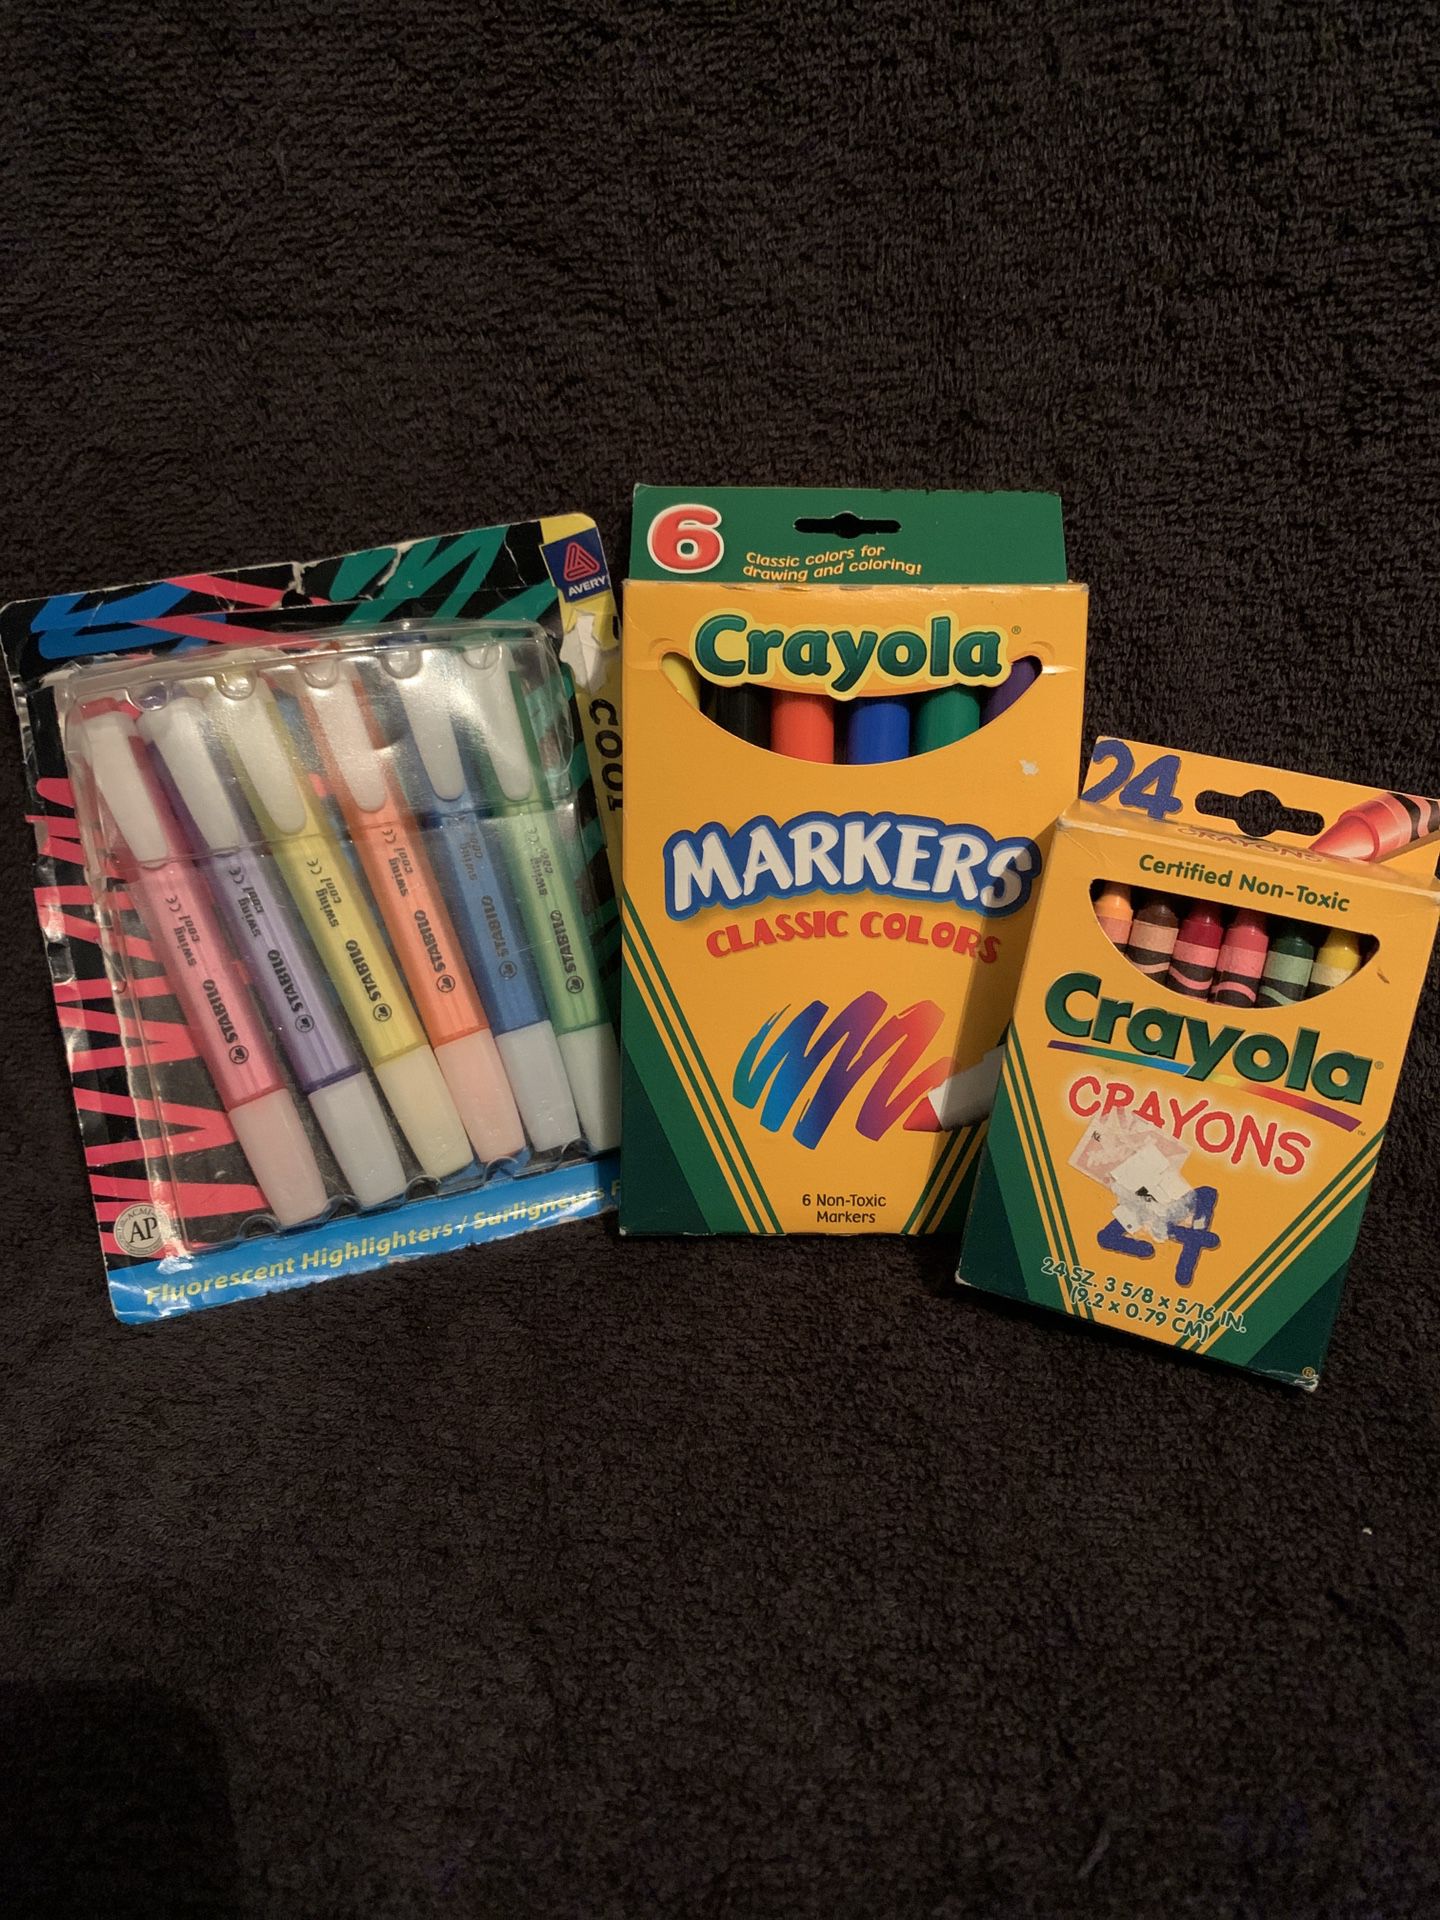 Crayola Crayons, Crayola Markers & Avery Fluorescent Hi Lighters